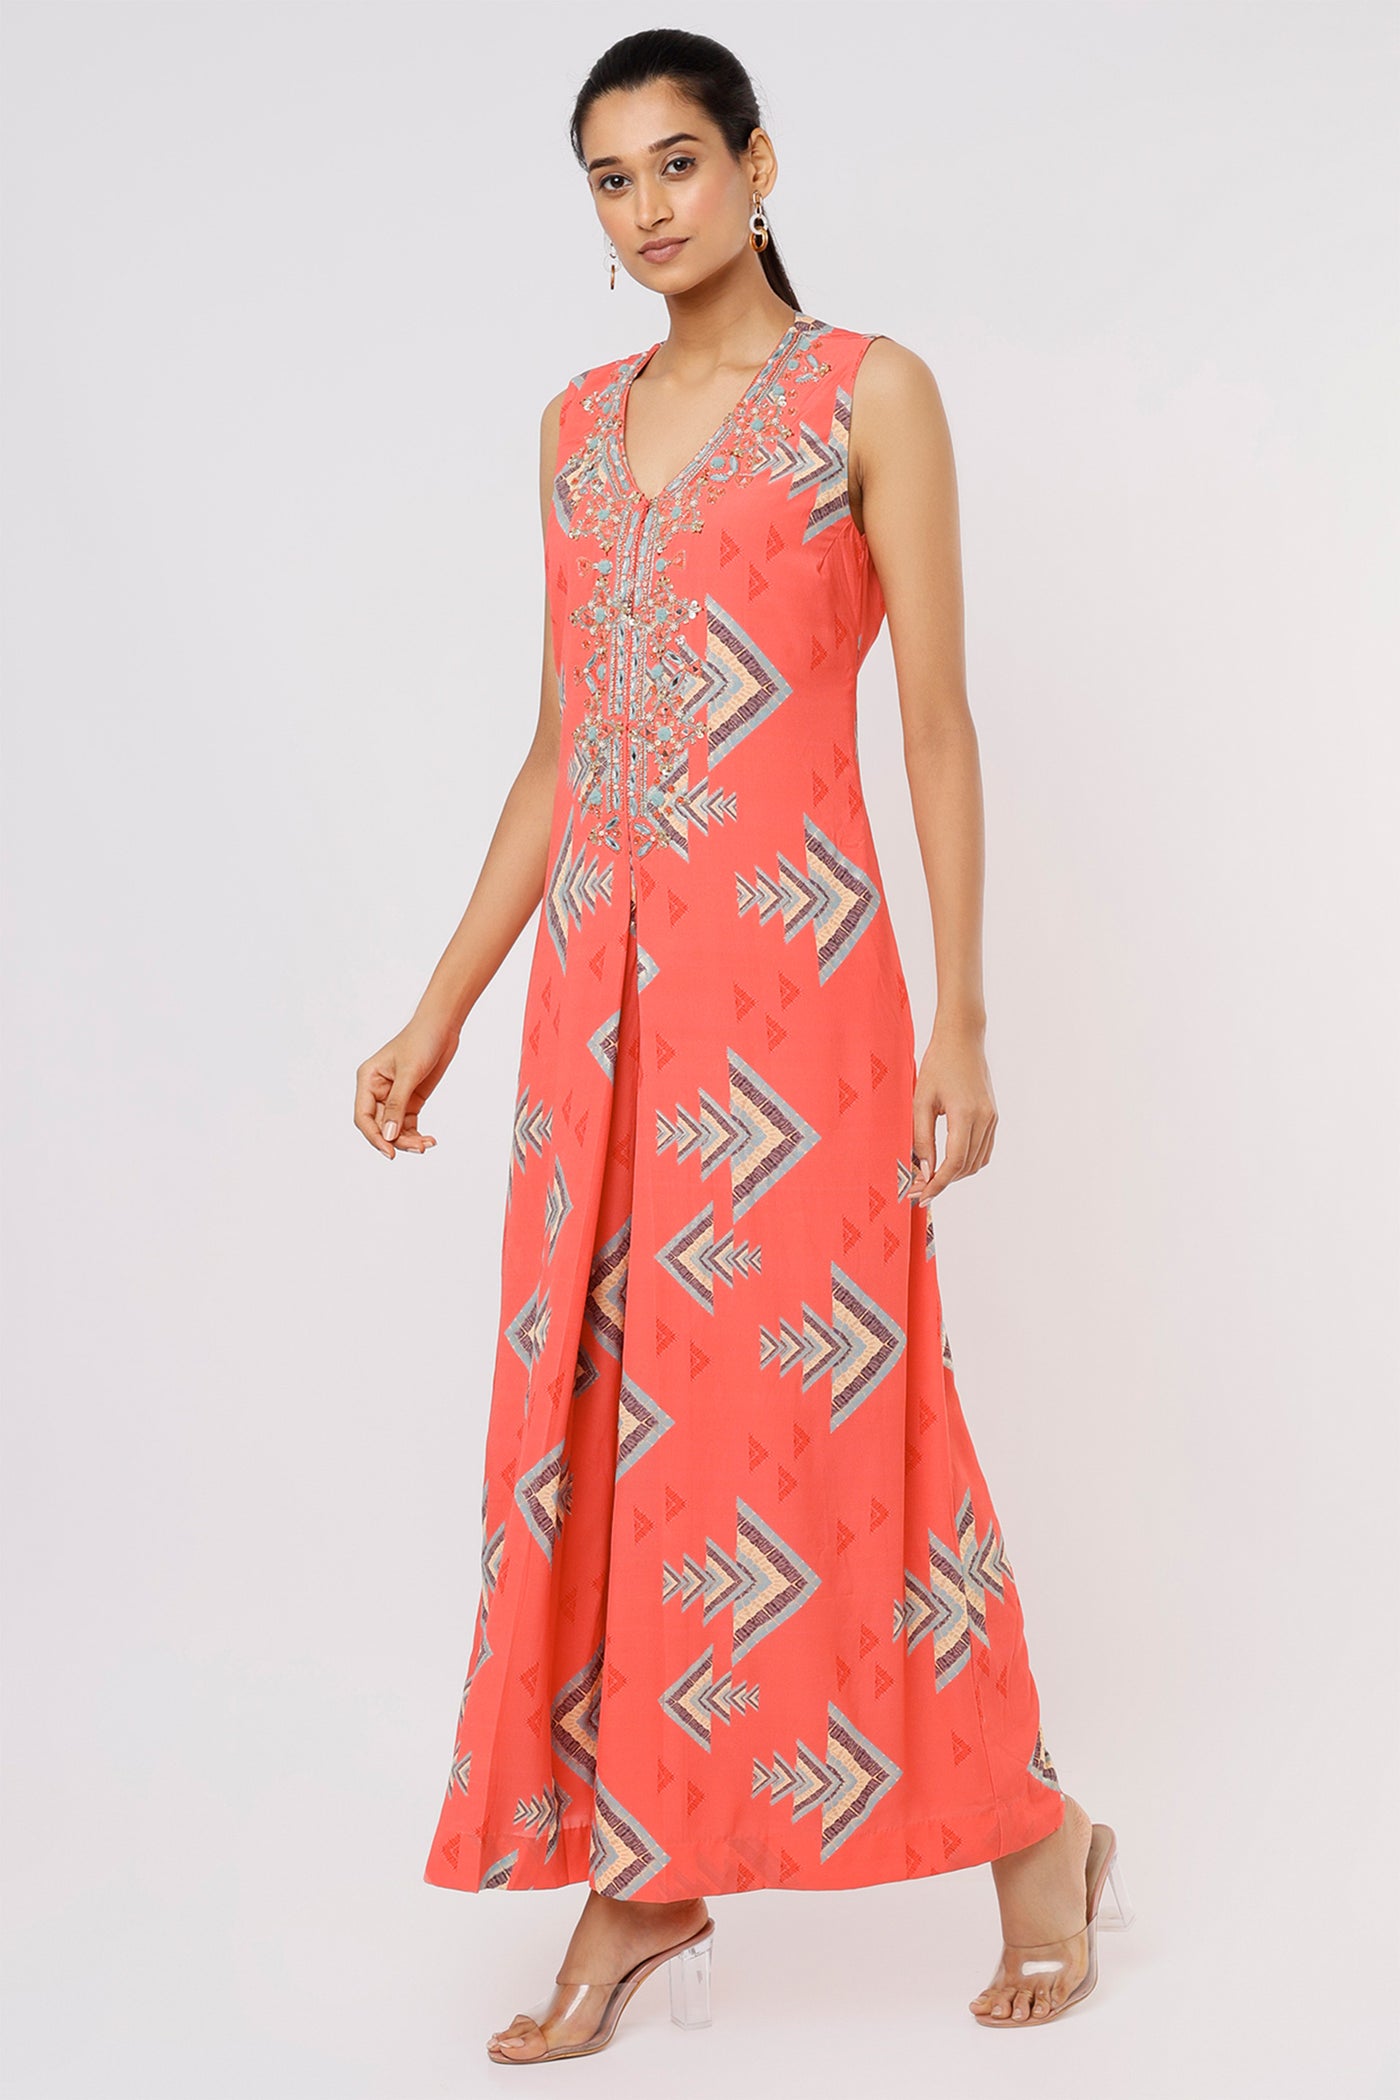 Gopi vaid Zoe Jumpsuit coral festive Indian designer wear online shopping melange singapore